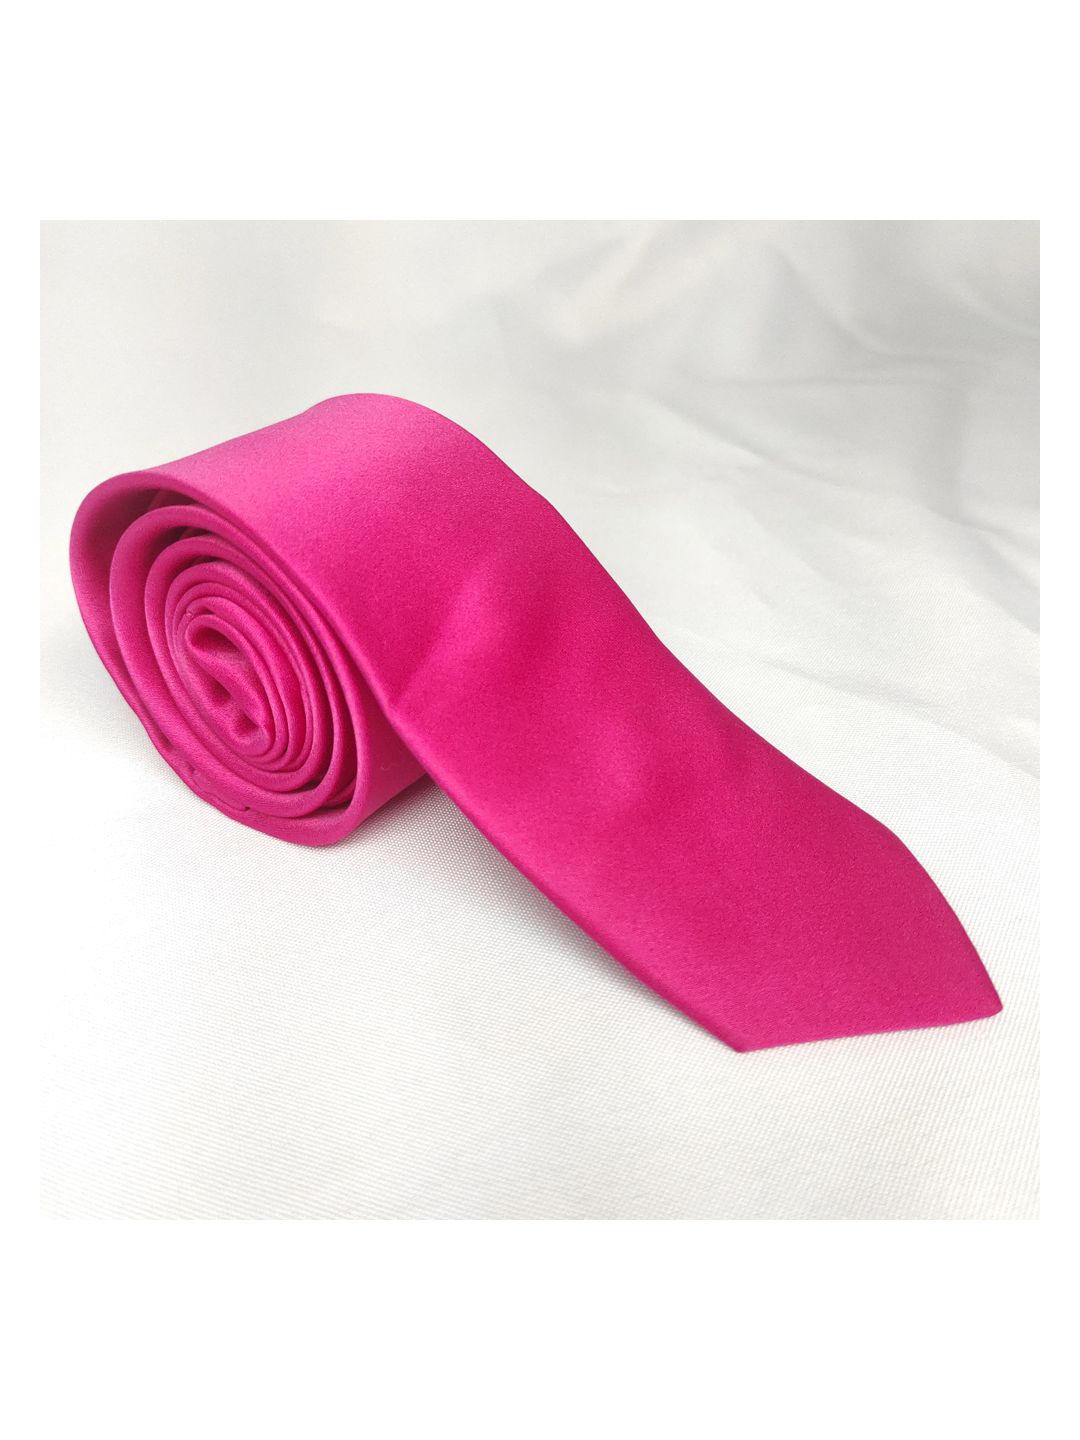 Gravata Slim Colors Rosa - Roberto Alfaiate | Trajes fino sob medida